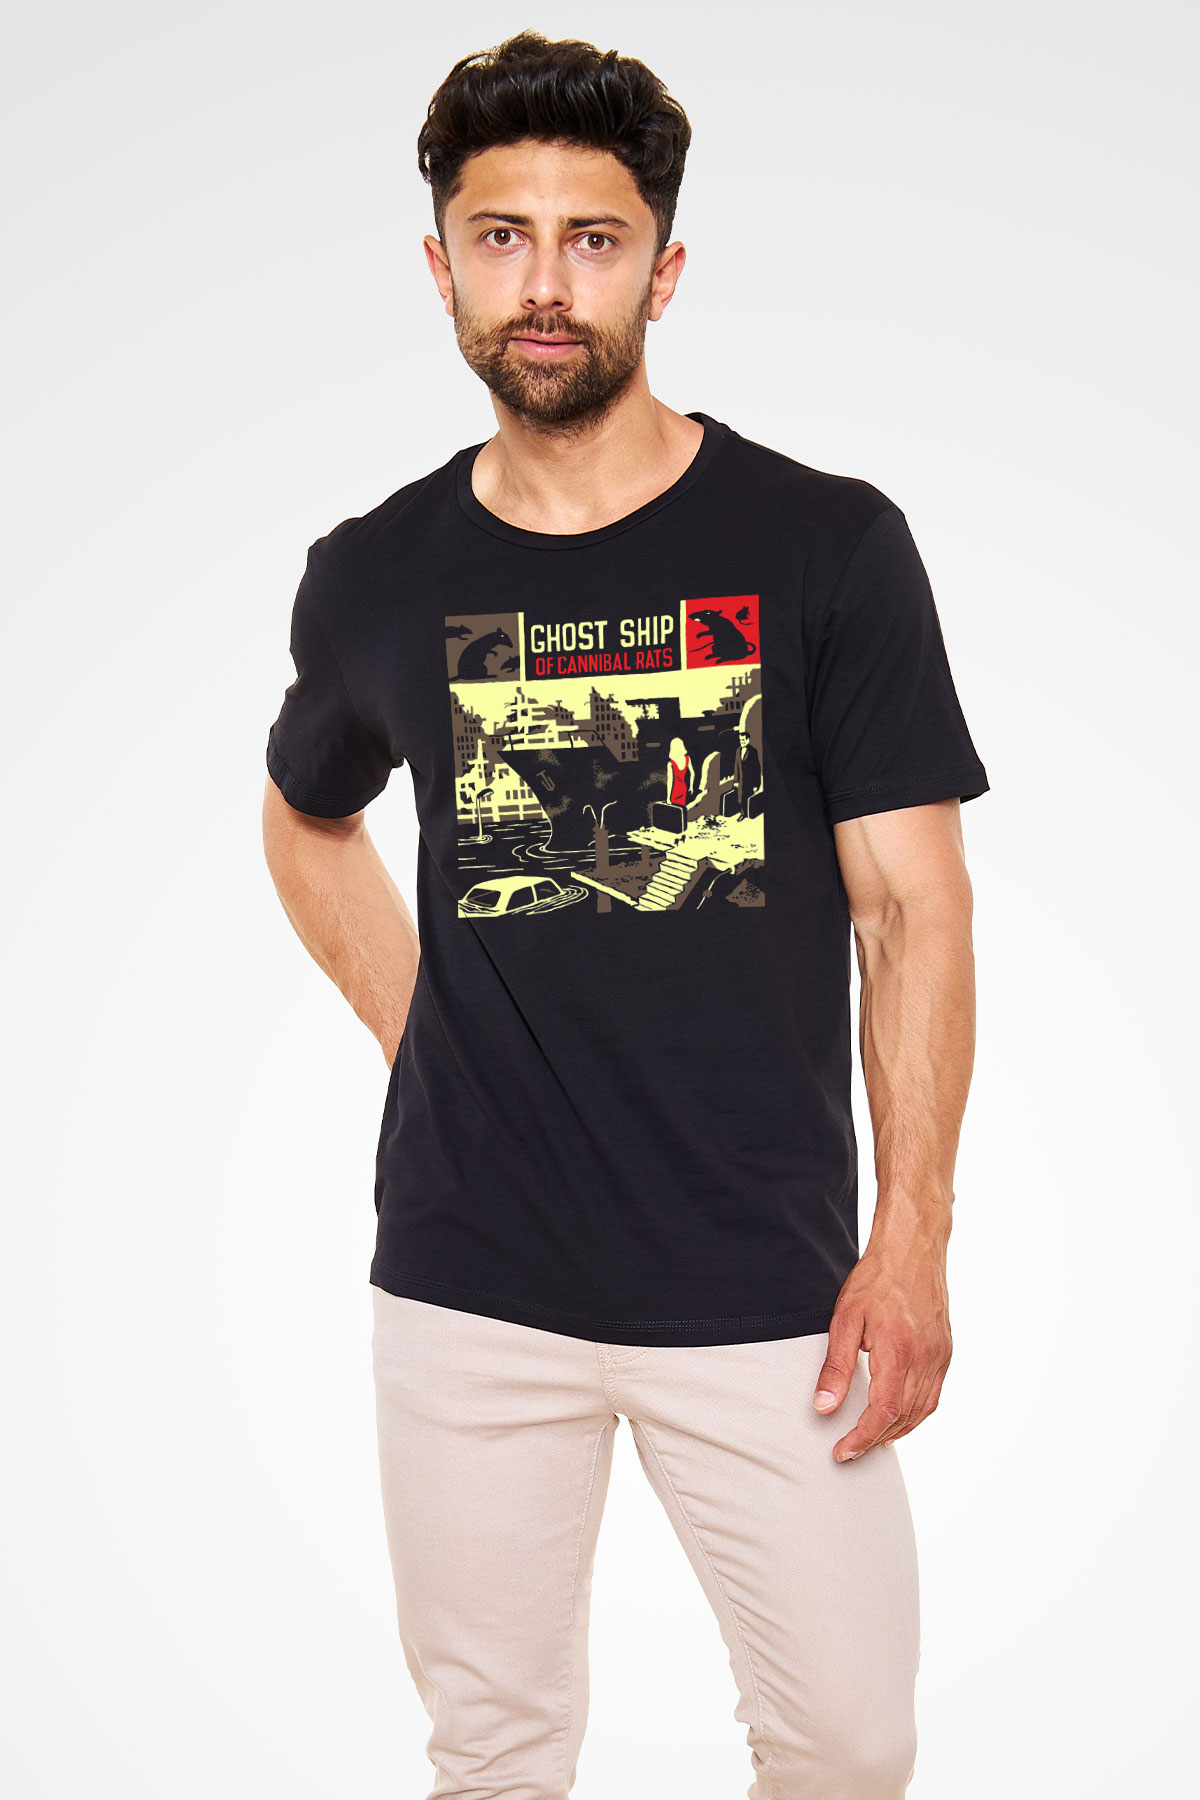 Billy Talent Black Unisex T-Shirt - Tees - Shirts